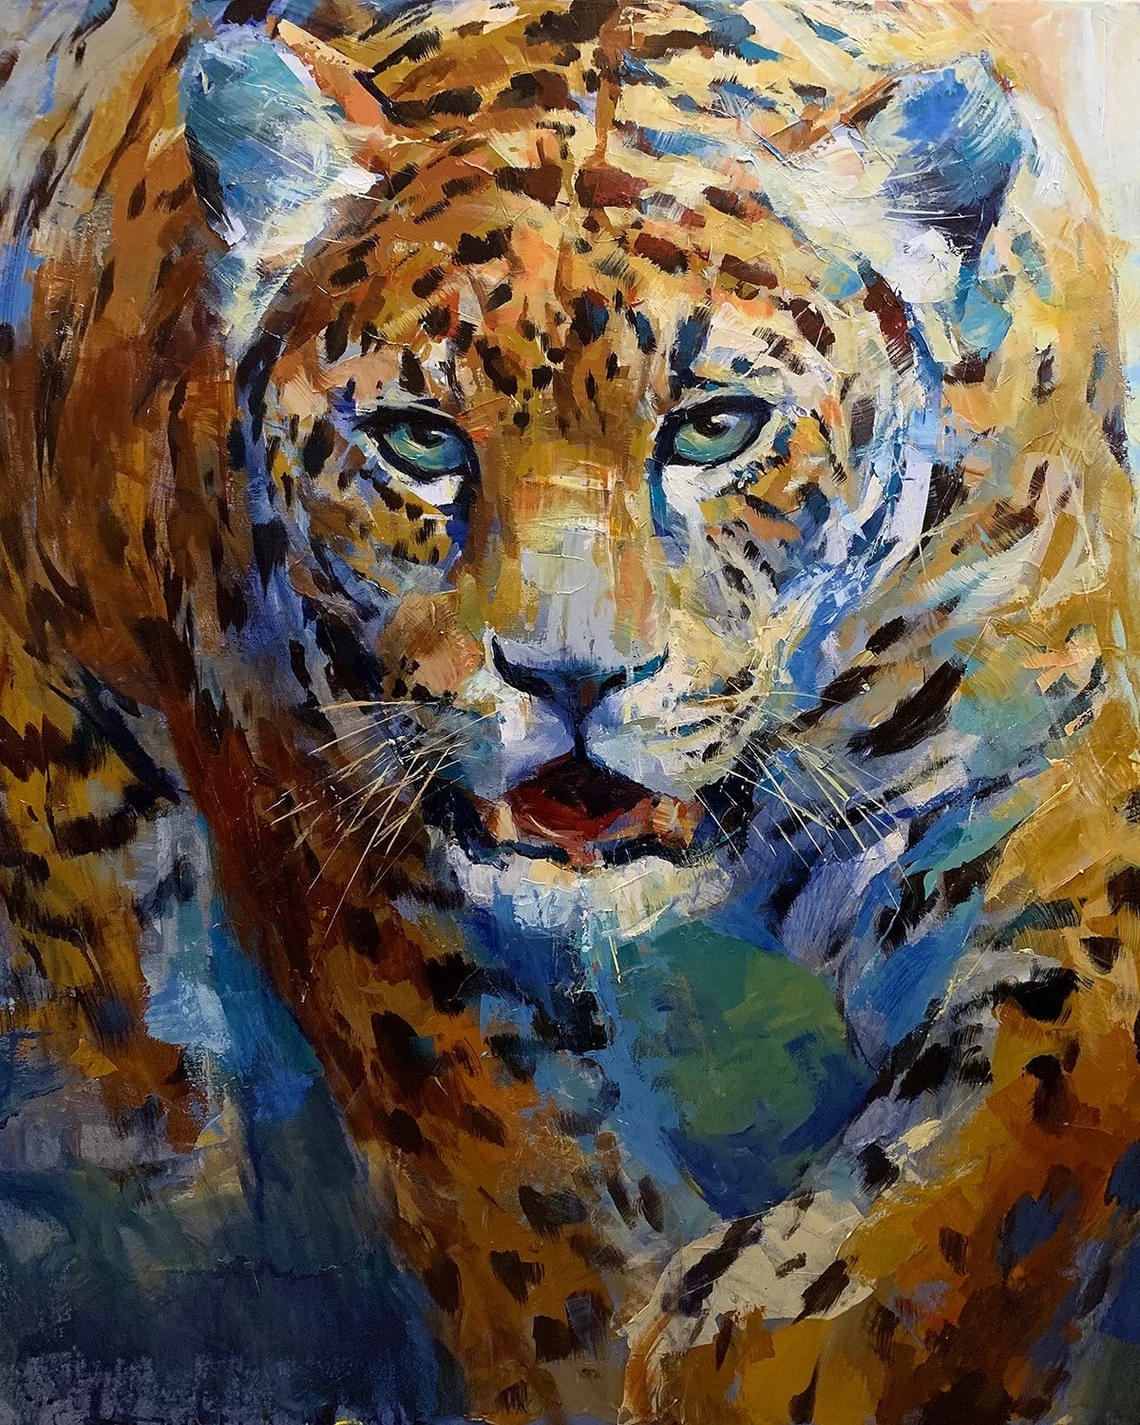 "Leopard" - Leopard - Wildlife Artwork